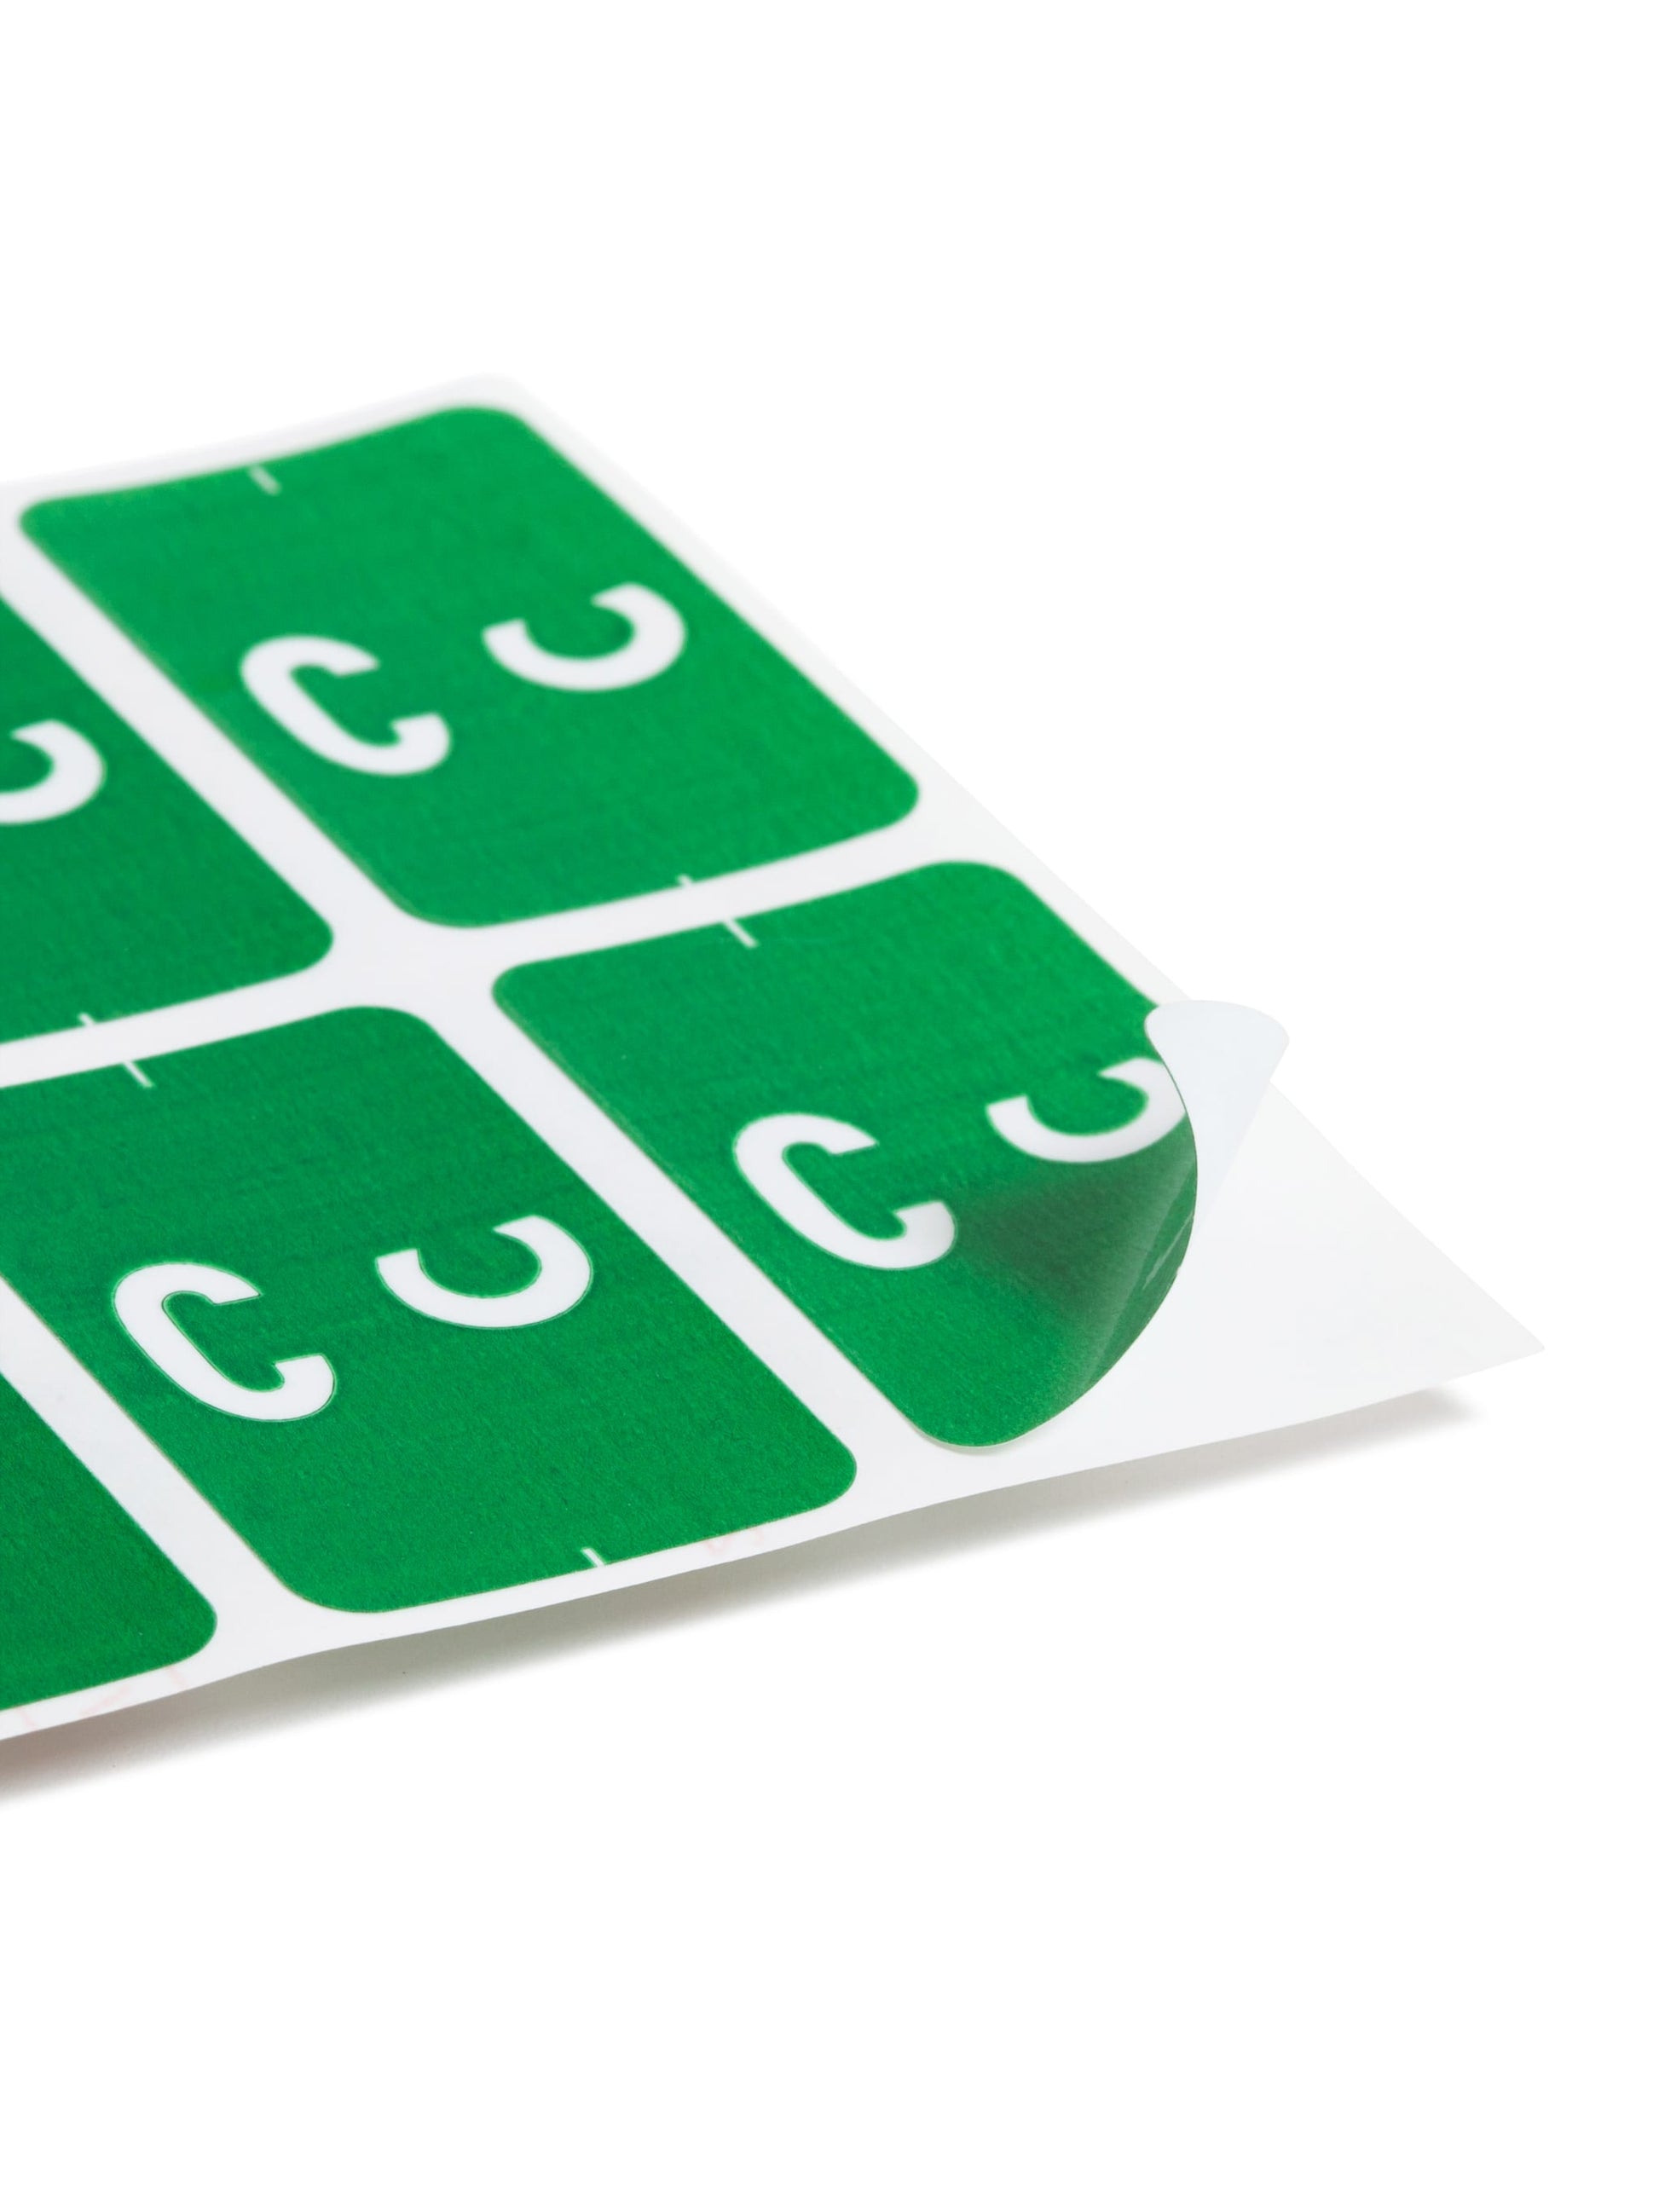 AlphaZ® ACCS Color Coded Alphabetic Labels - Sheets, Dark Green Color, 1" X 1-5/8" Size, 